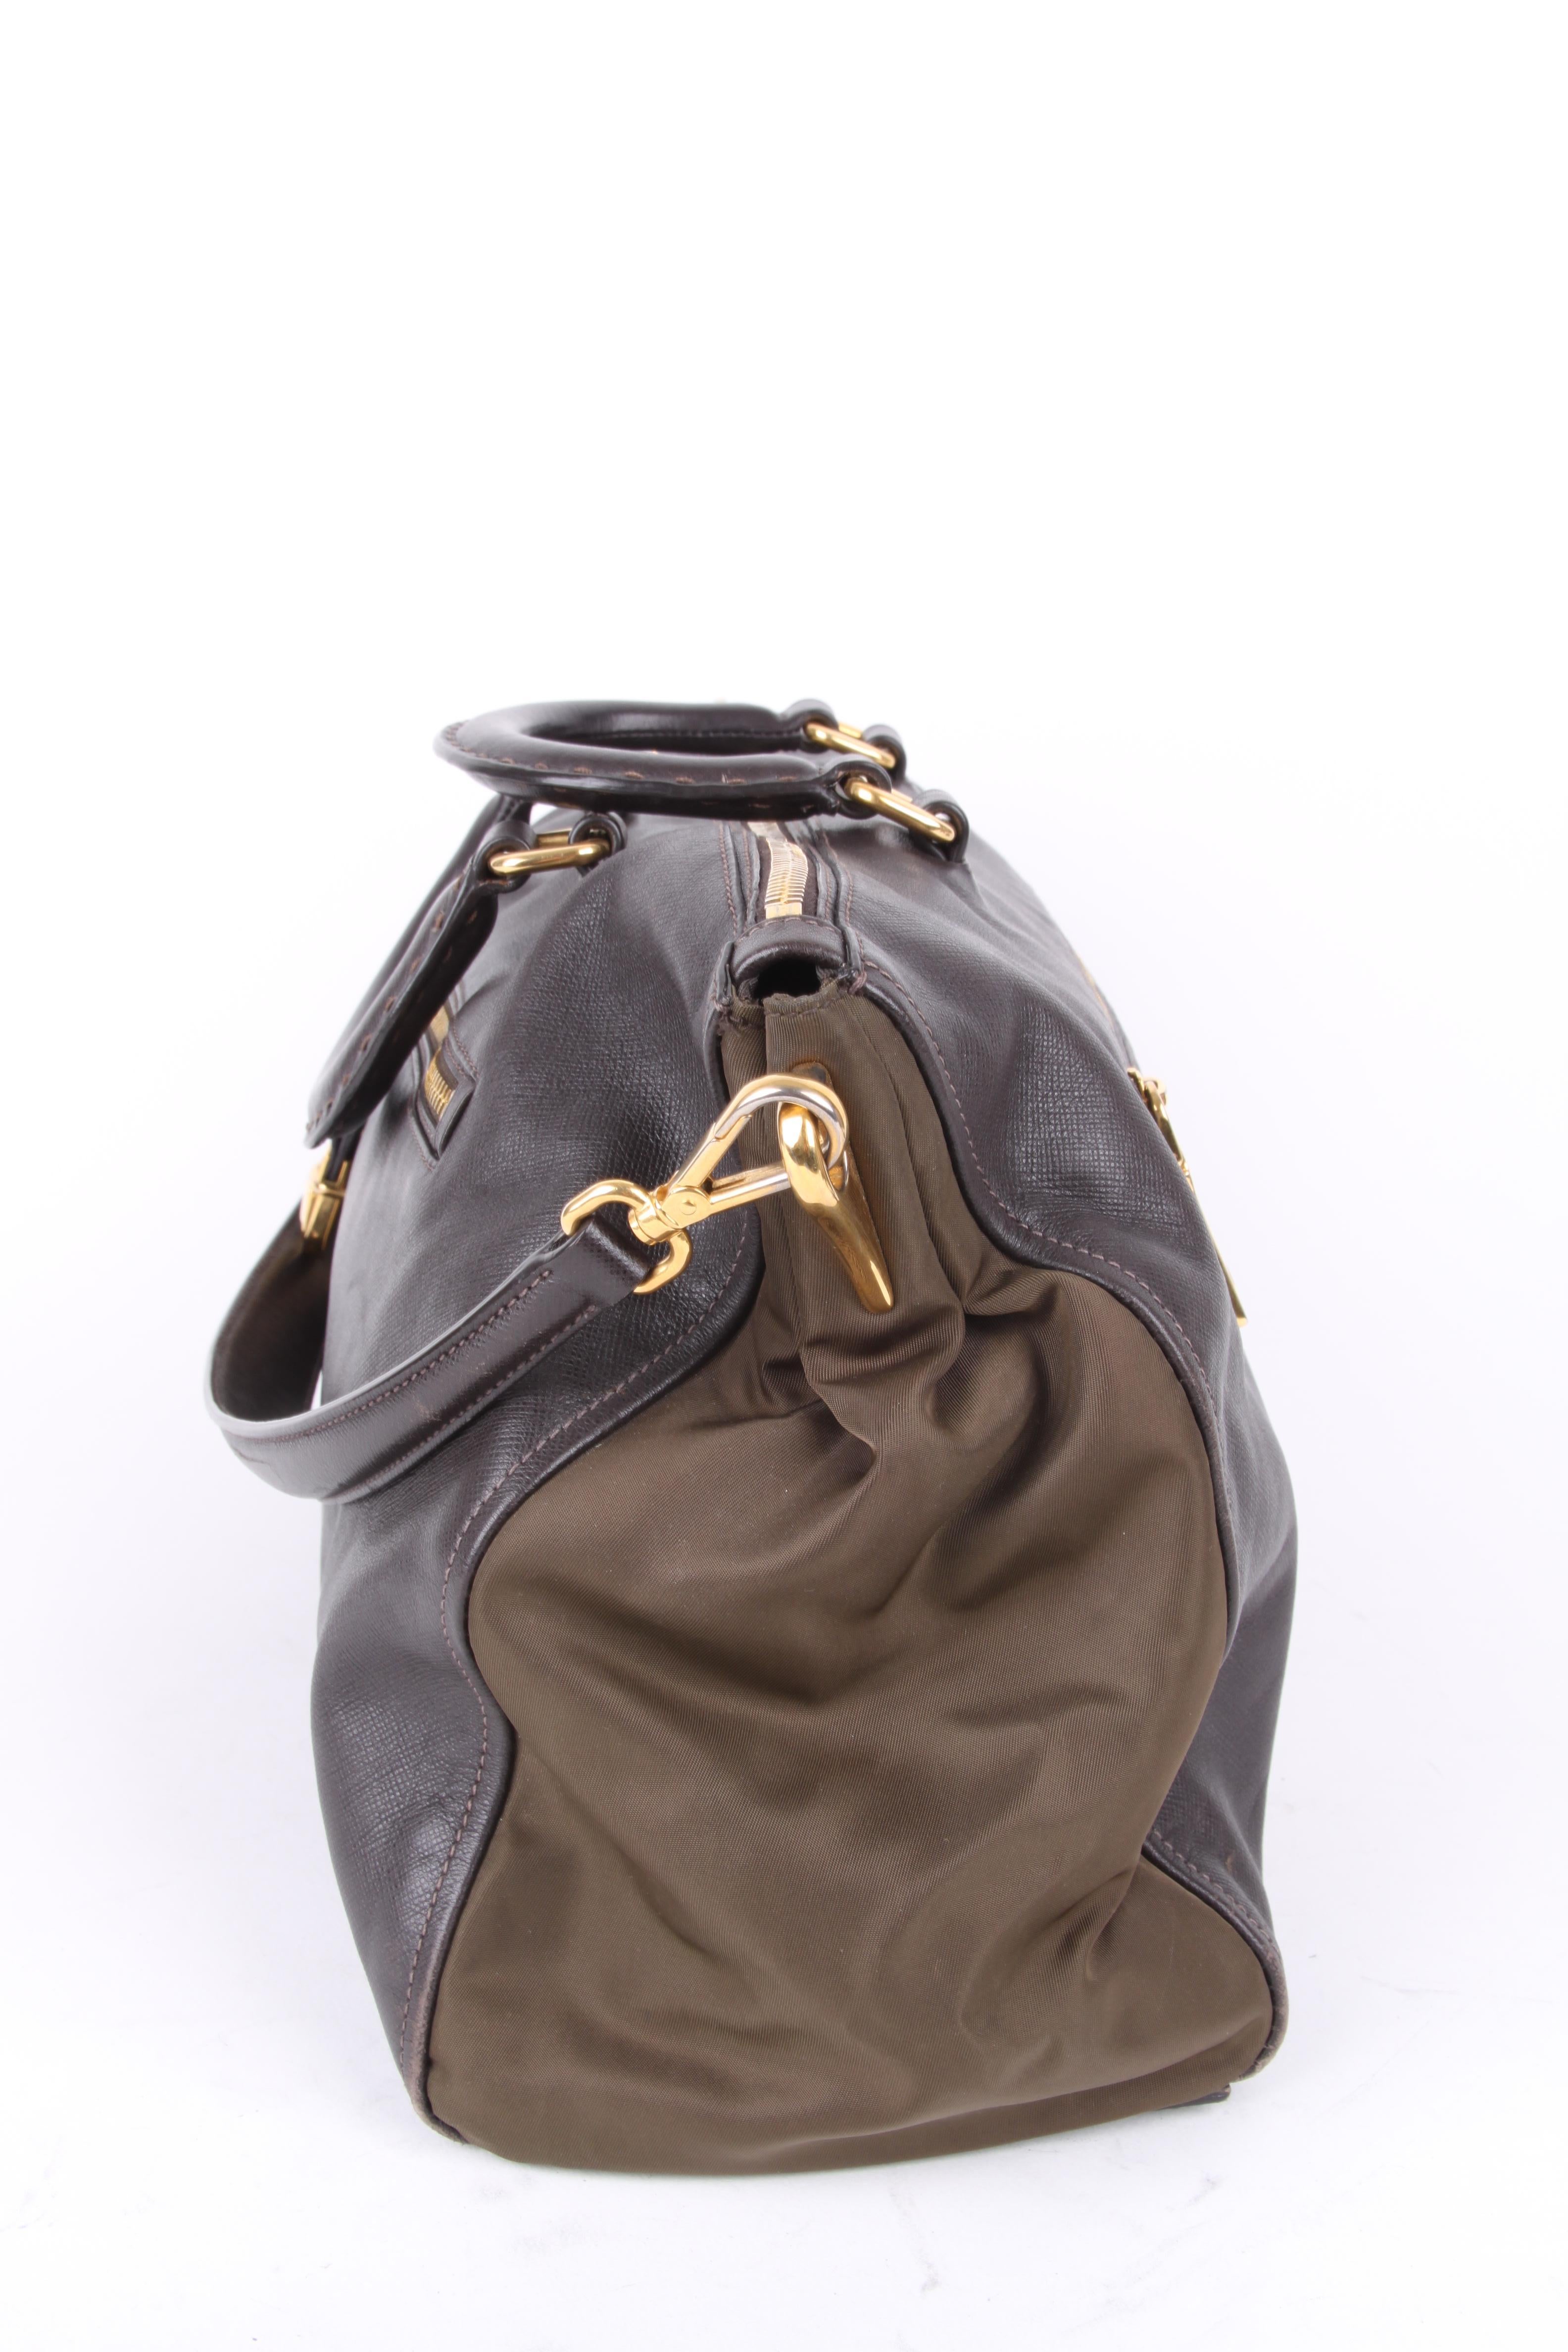 Women's or Men's Prada Brown Leather Green Canvas Handbag For Sale